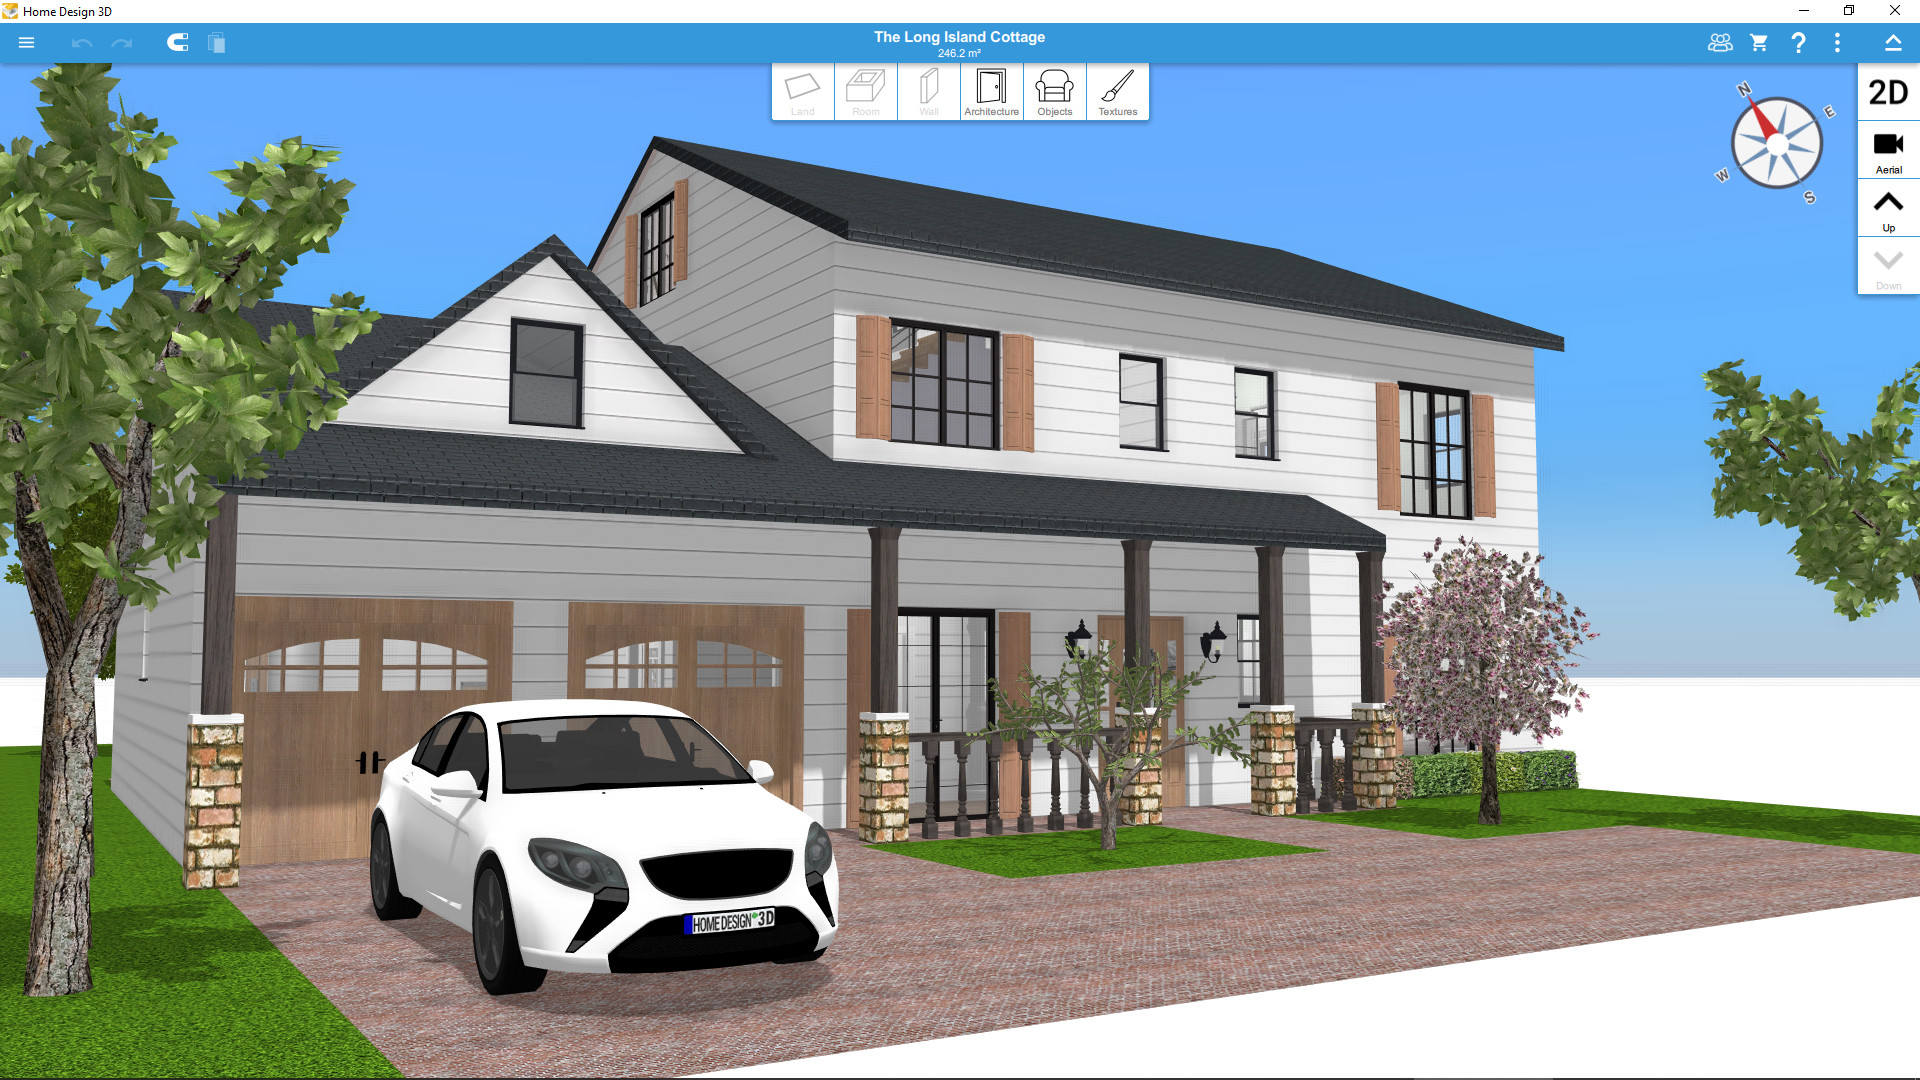 Home Design 3D trên Steam